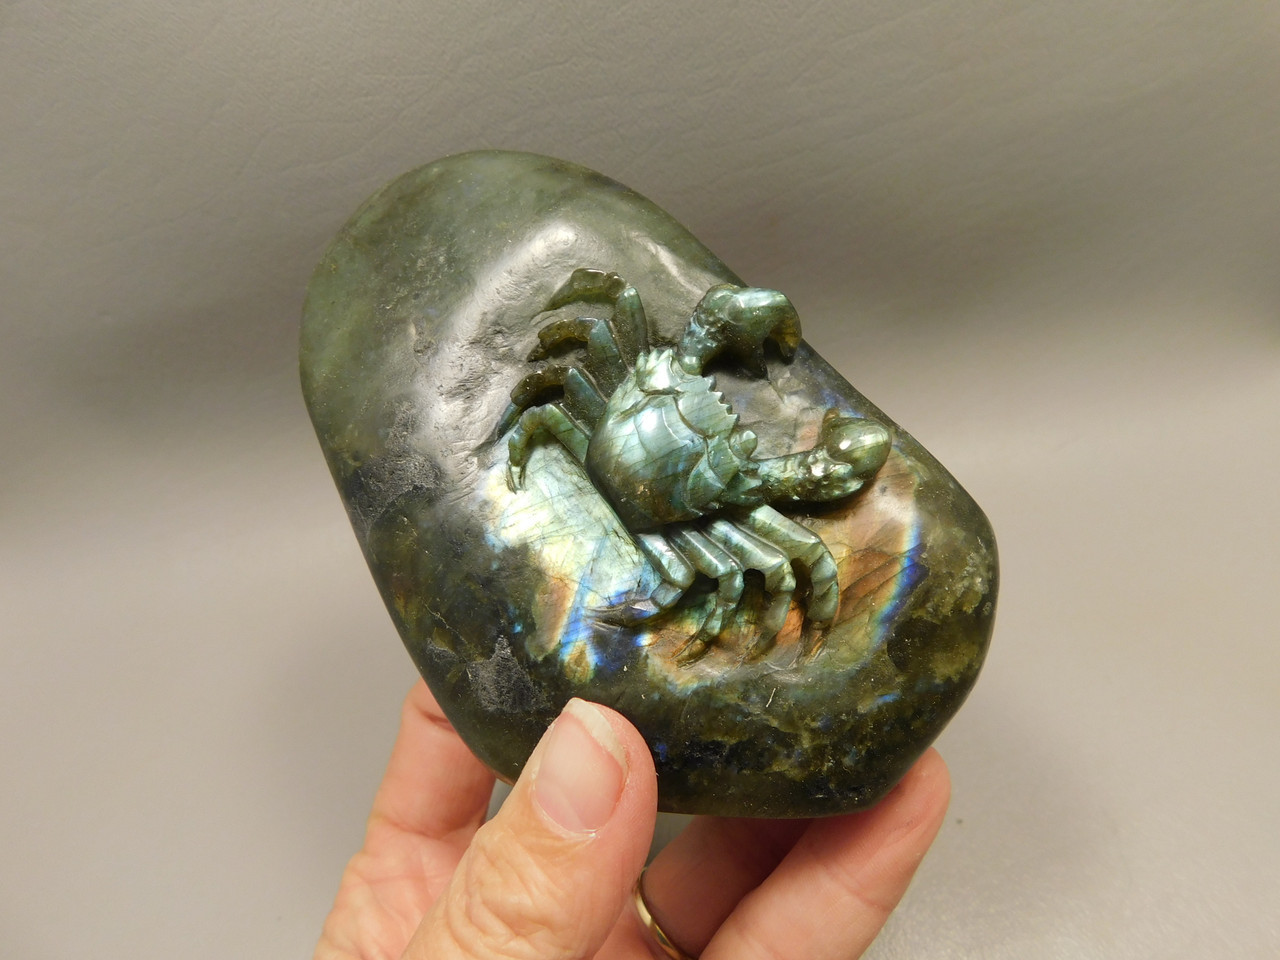 Crab Figurine Labradorite Stone Animal 3.5 inch Carving #O330